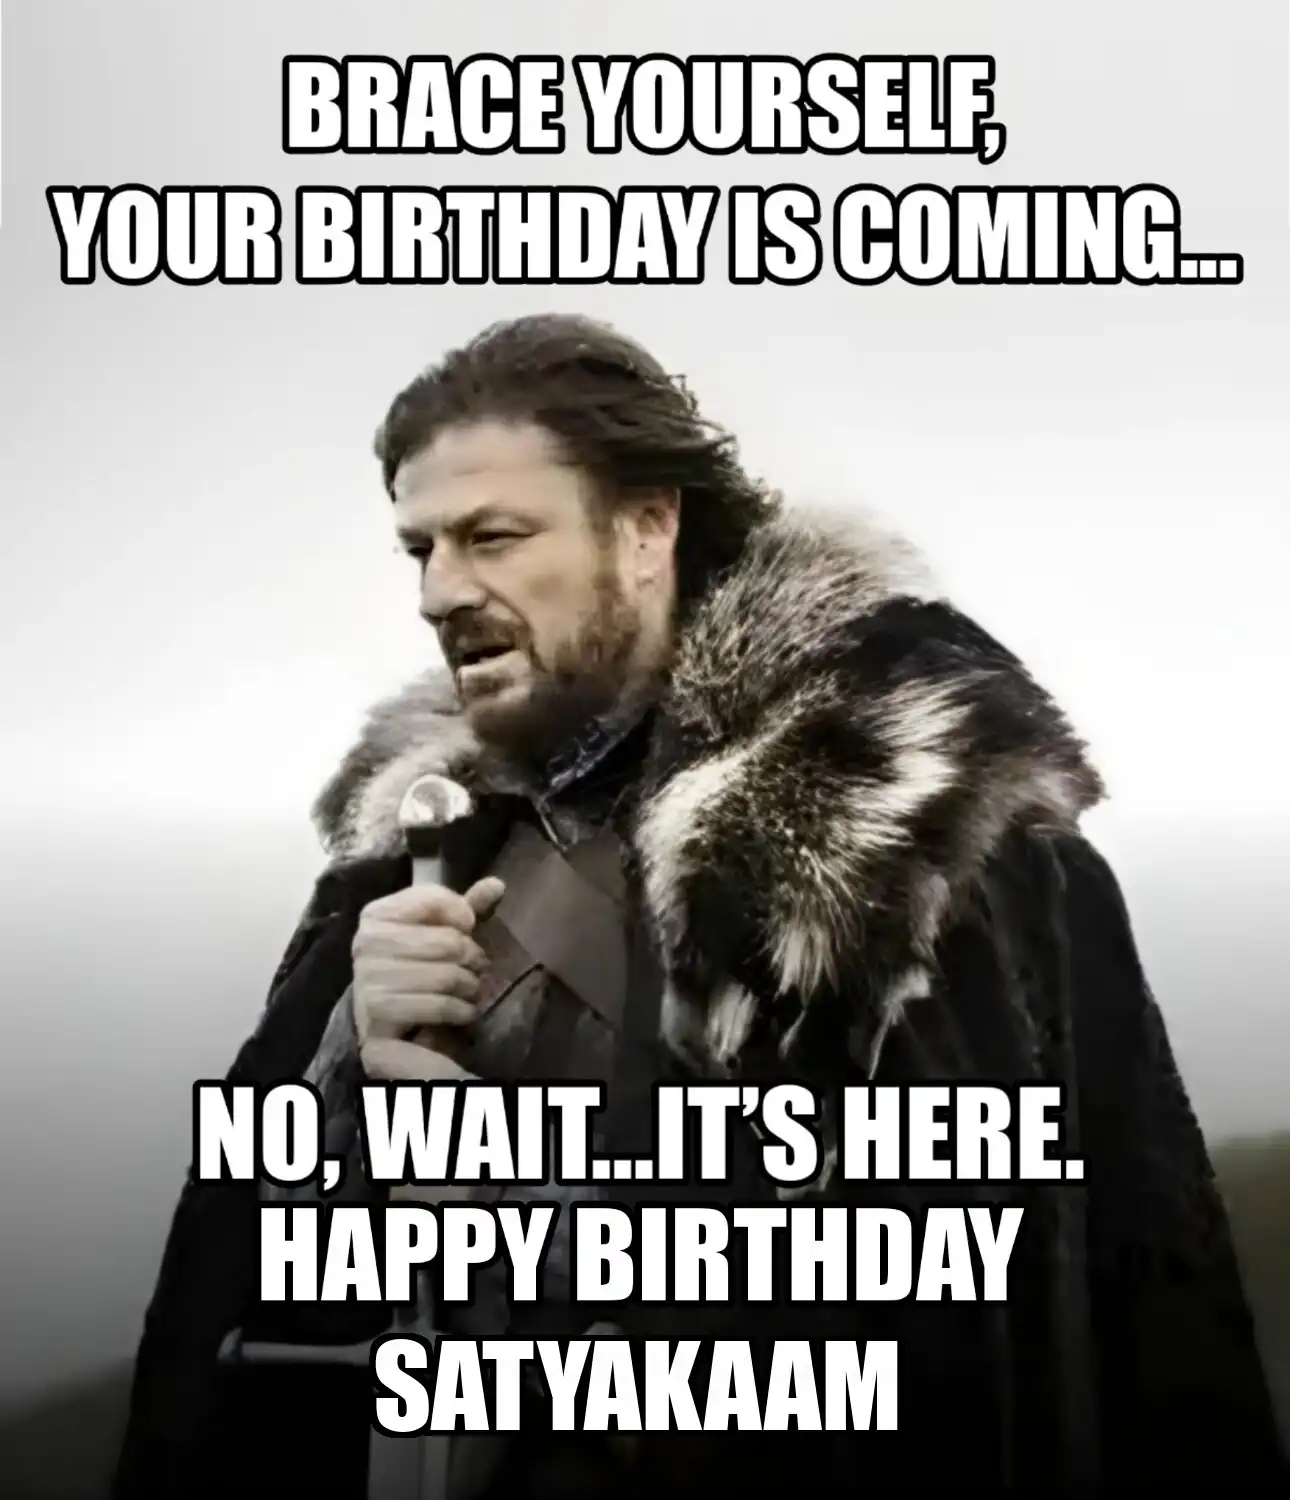 Happy Birthday Satyakaam Brace Yourself Your Birthday Is Coming Meme